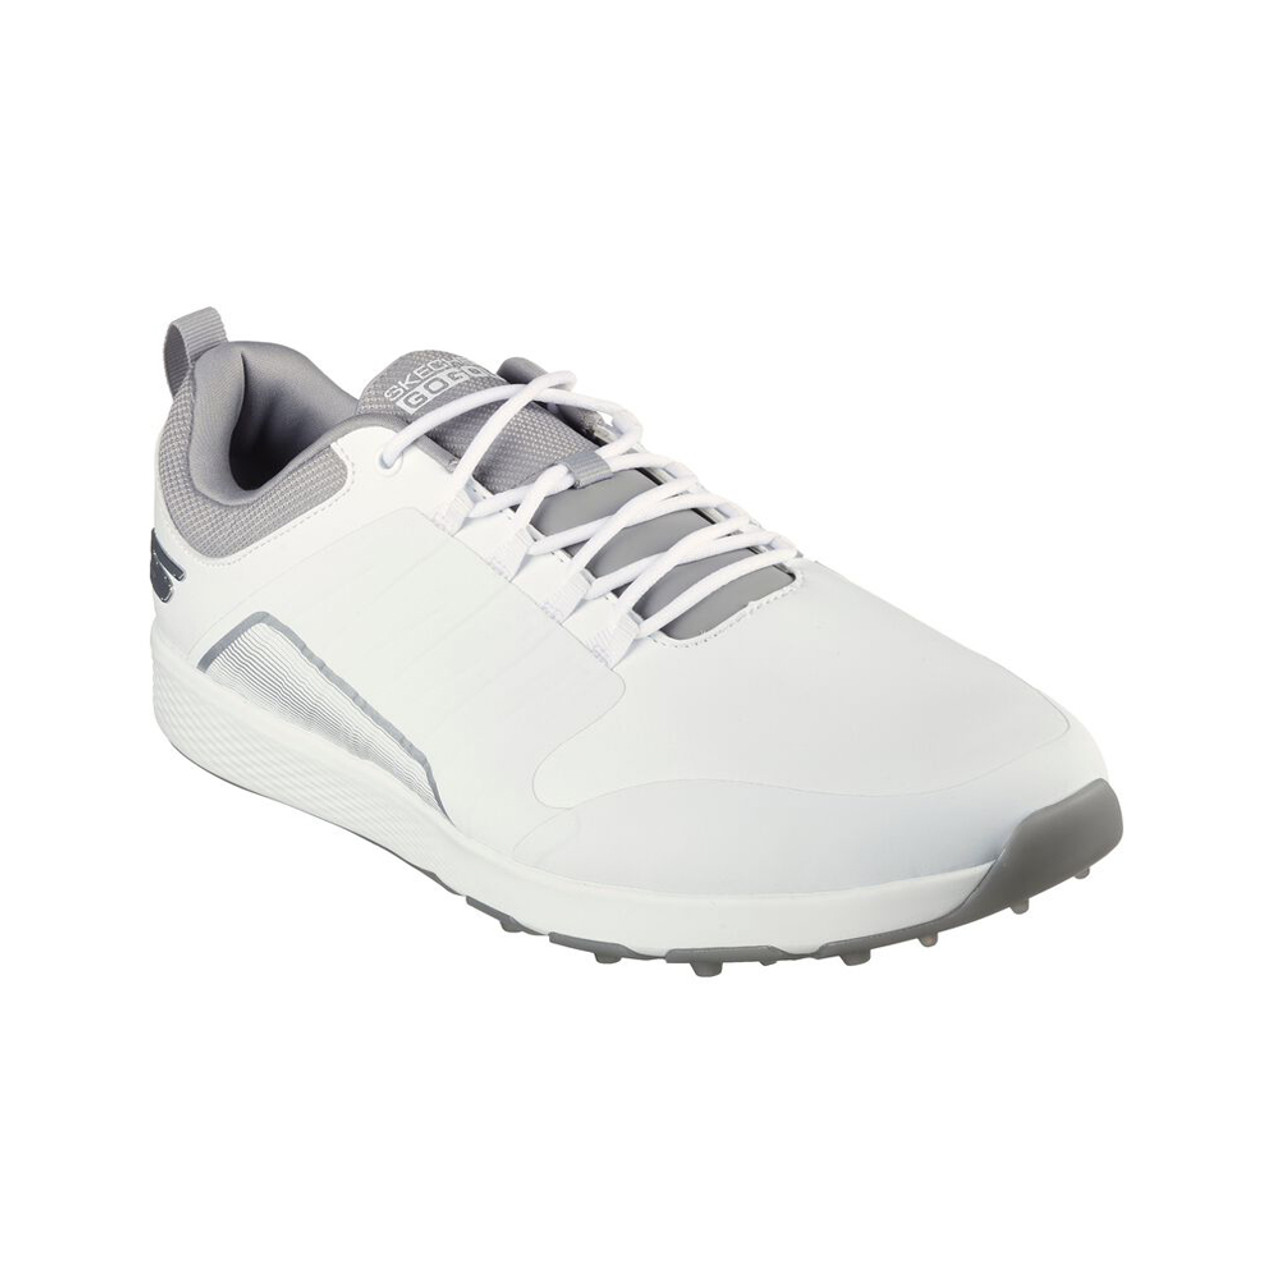 Men's GOLF - Elite 4 Golf Shoe - White | Discount Skechers Men's Golf & More Shoolu.com |